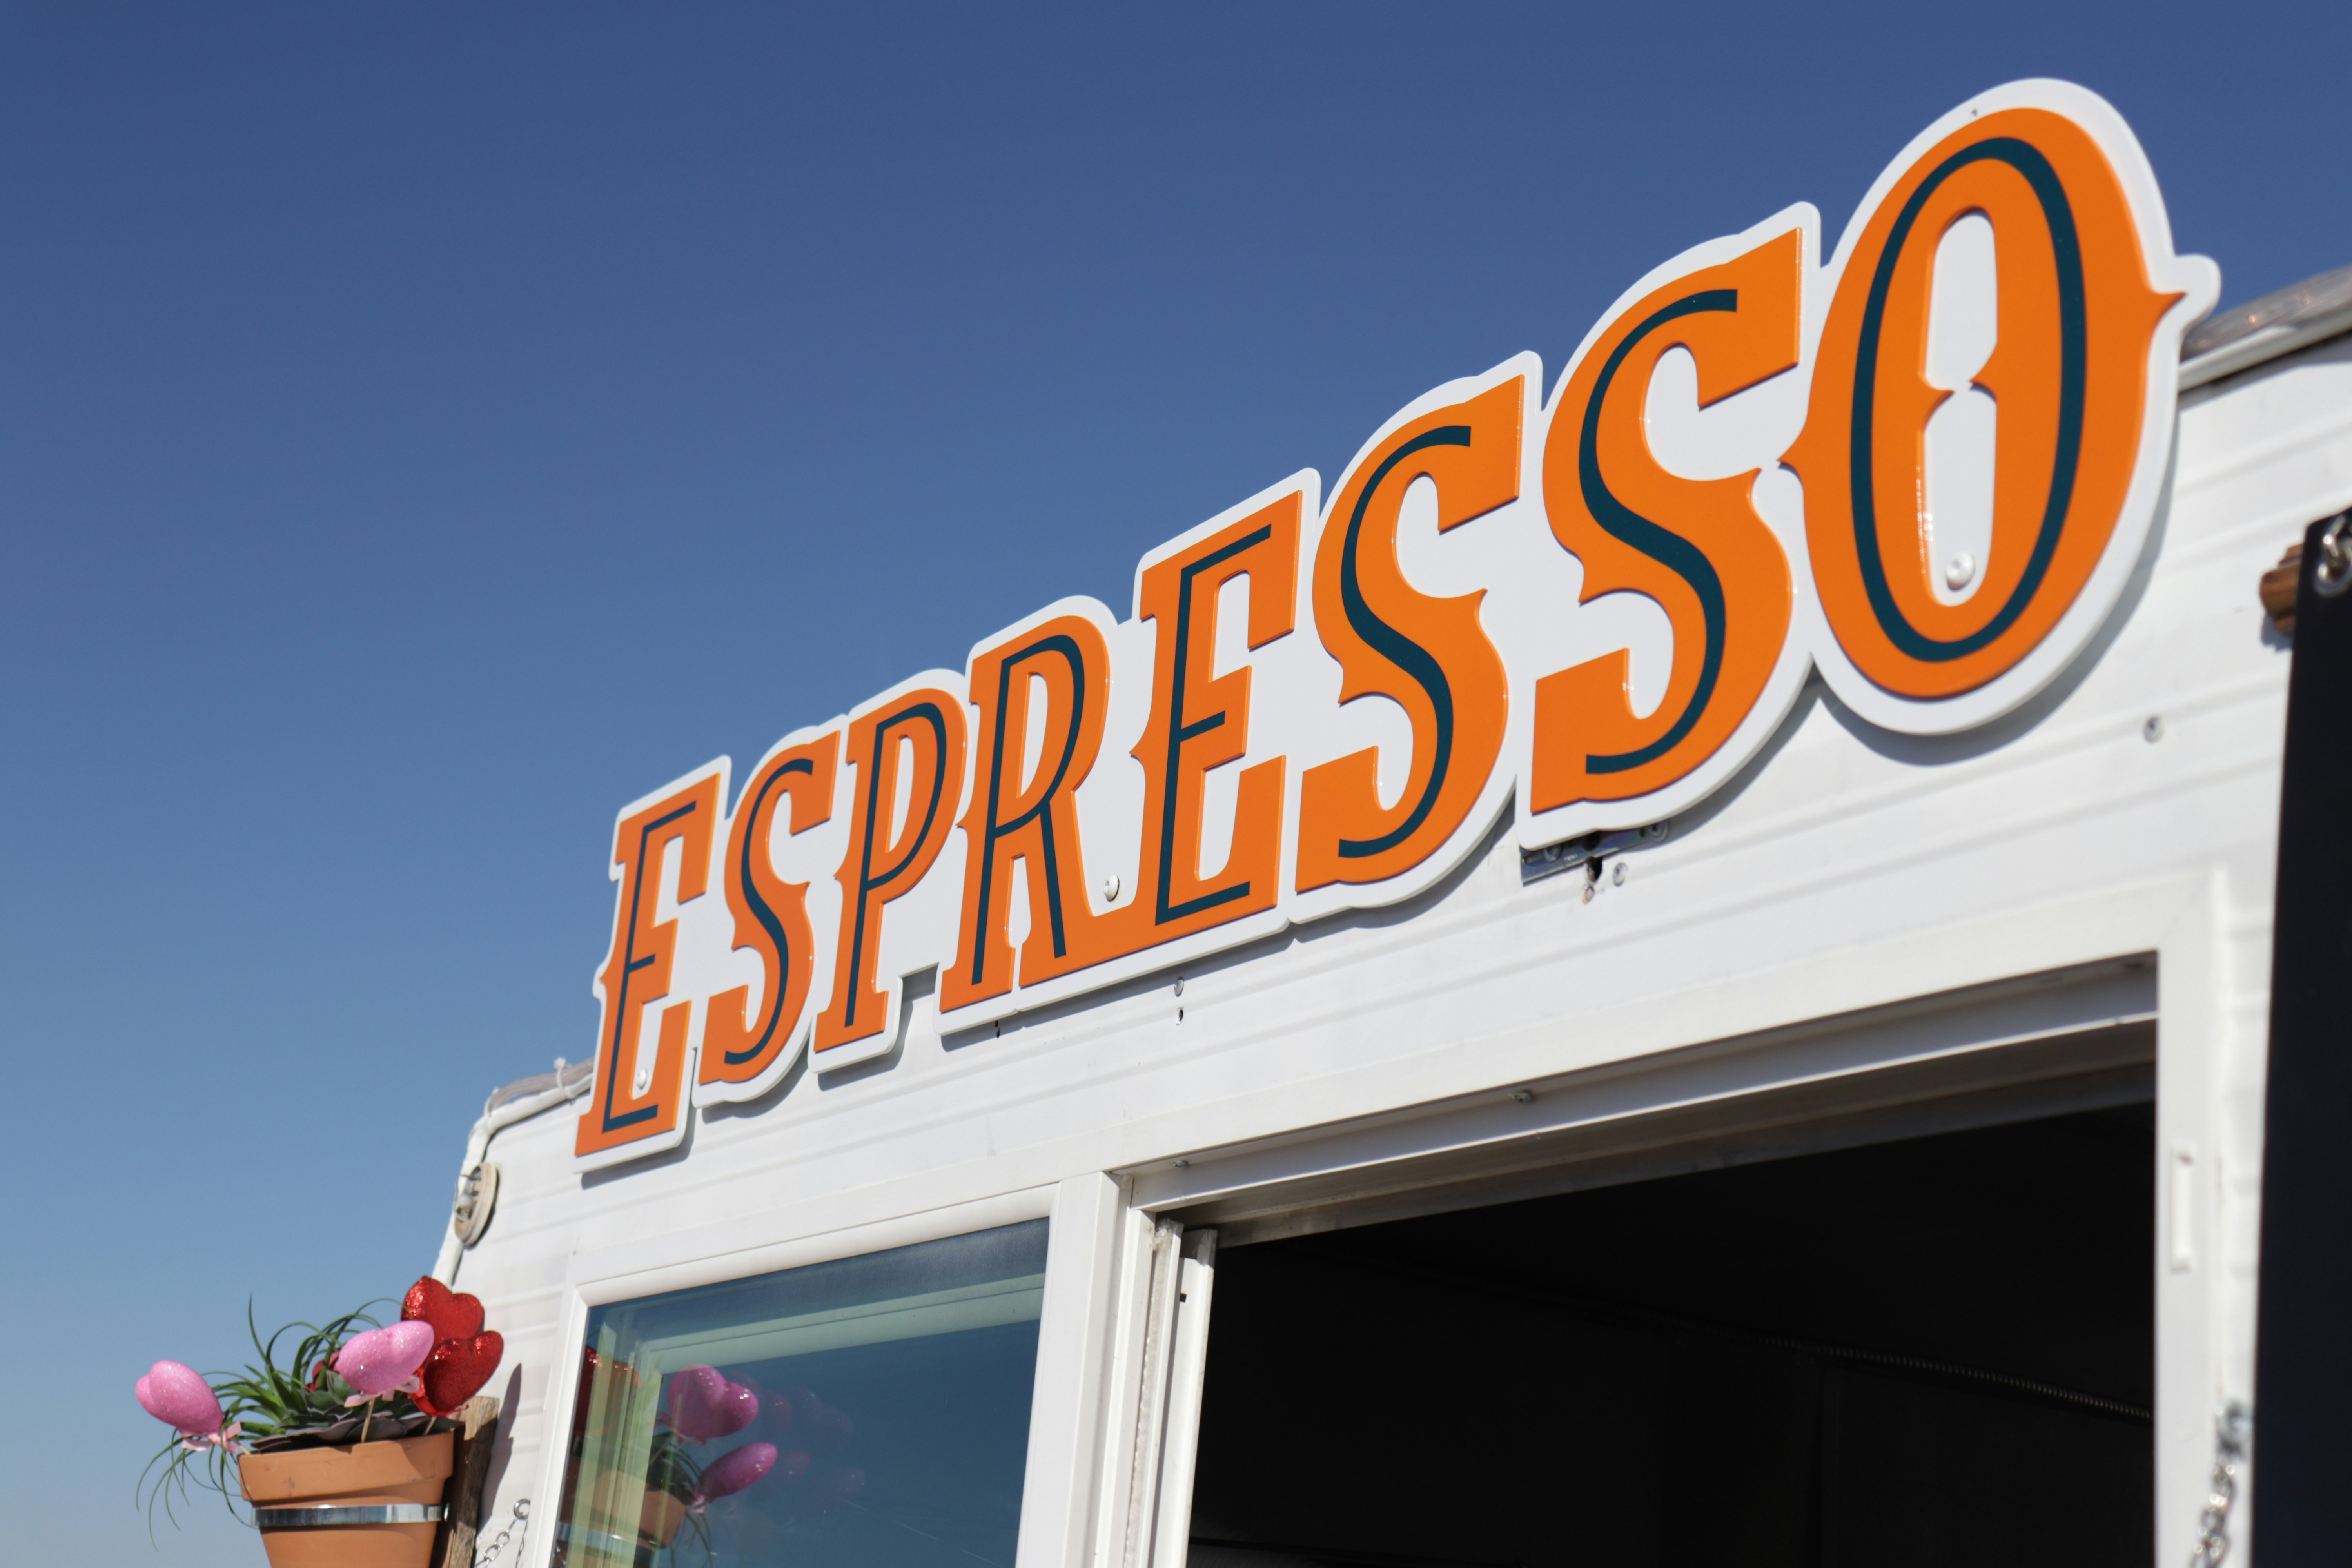 Espresso storefront